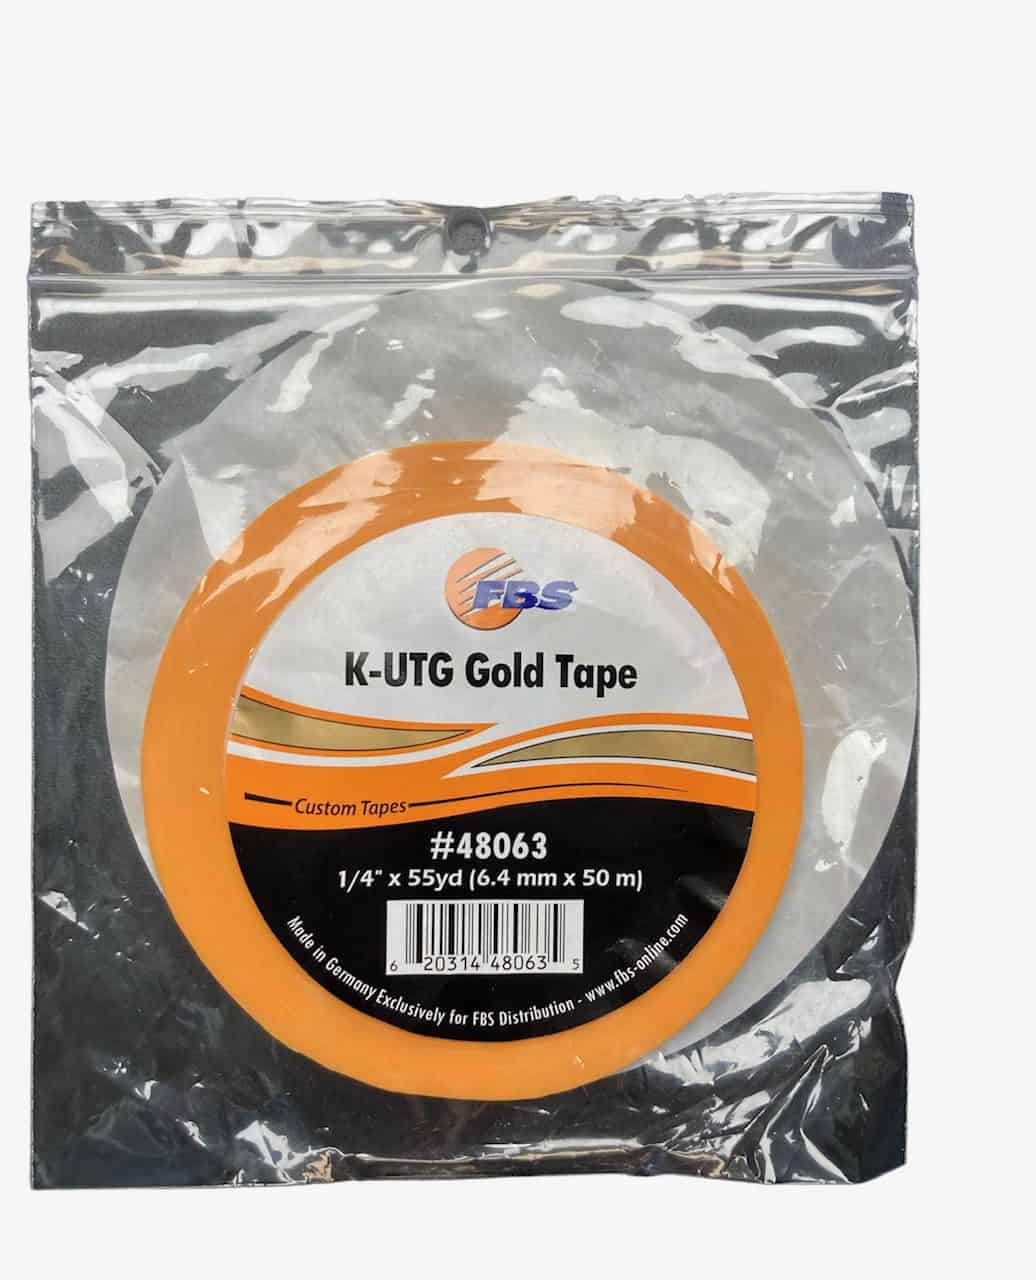 K-UTG gold tape 1/4″ x 55yd 2